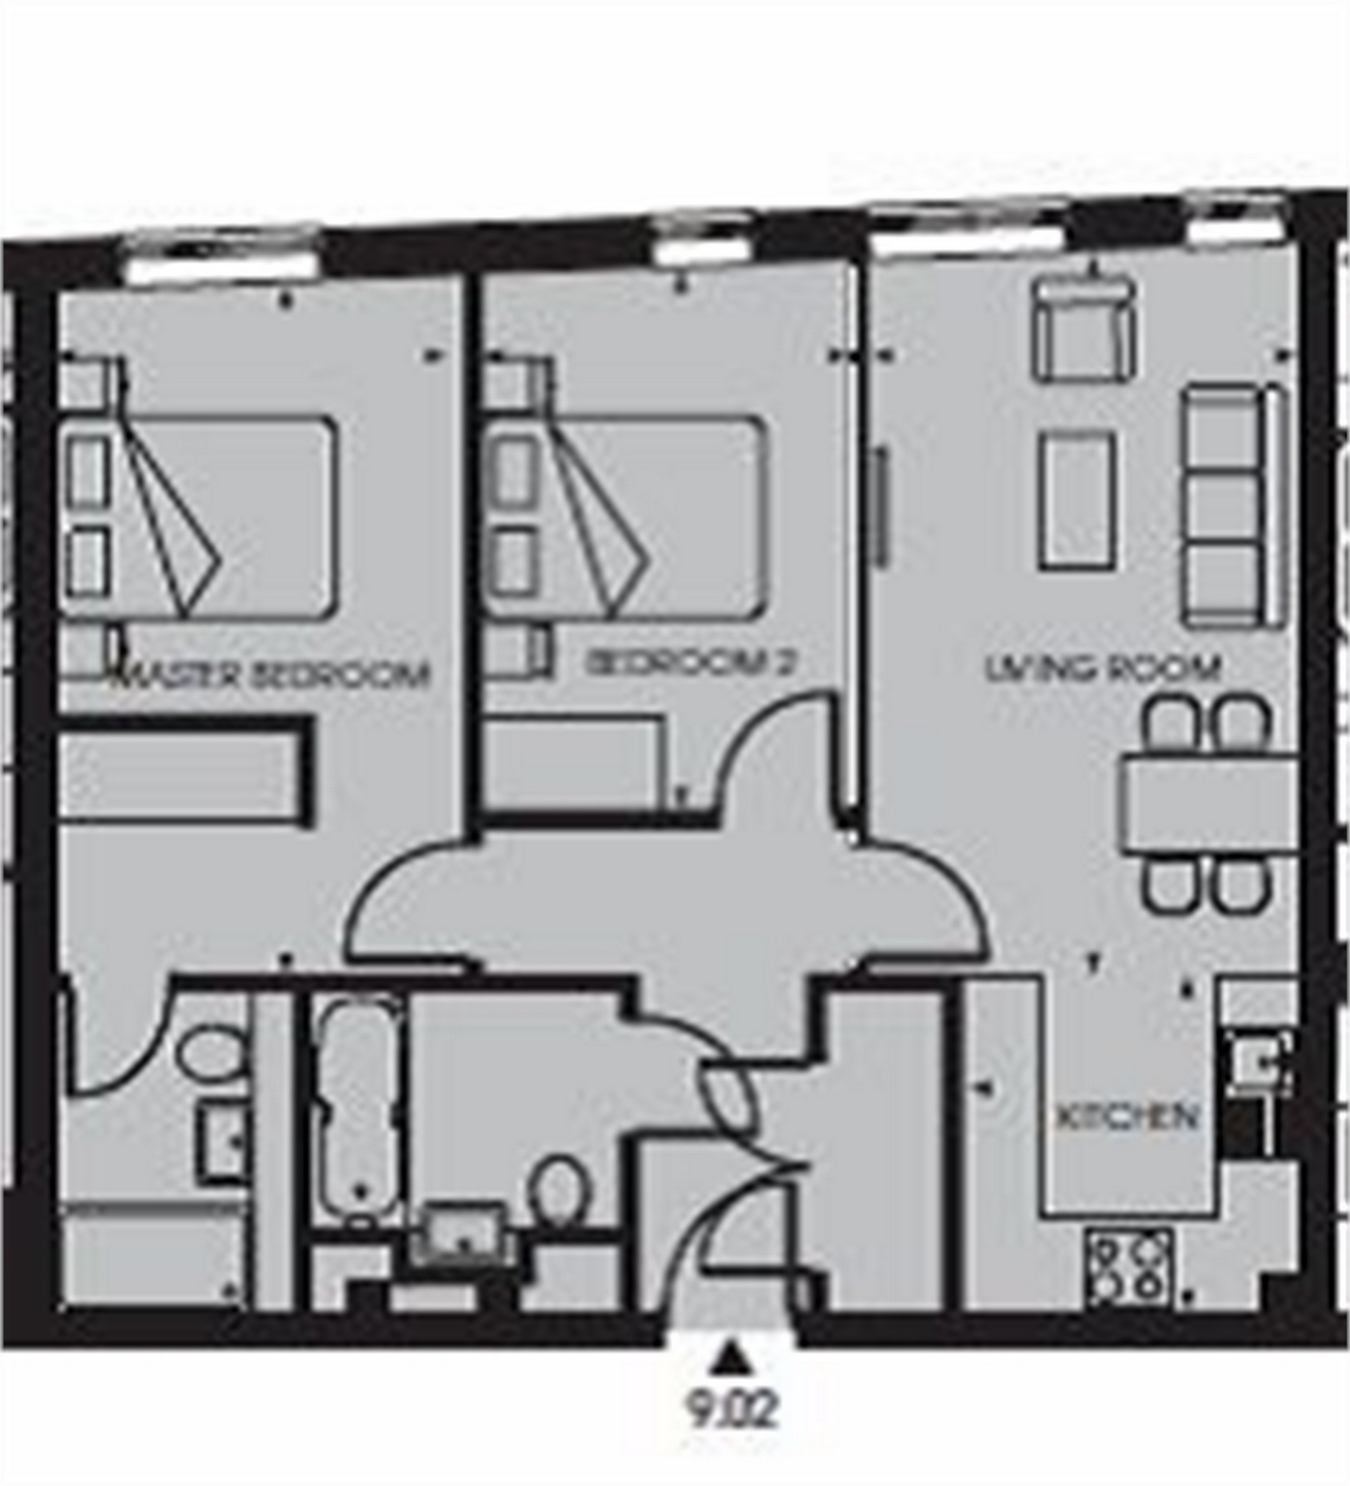 2 Bedrooms Flat to rent in Saffron Central Square, Croydon, Surrey CR0